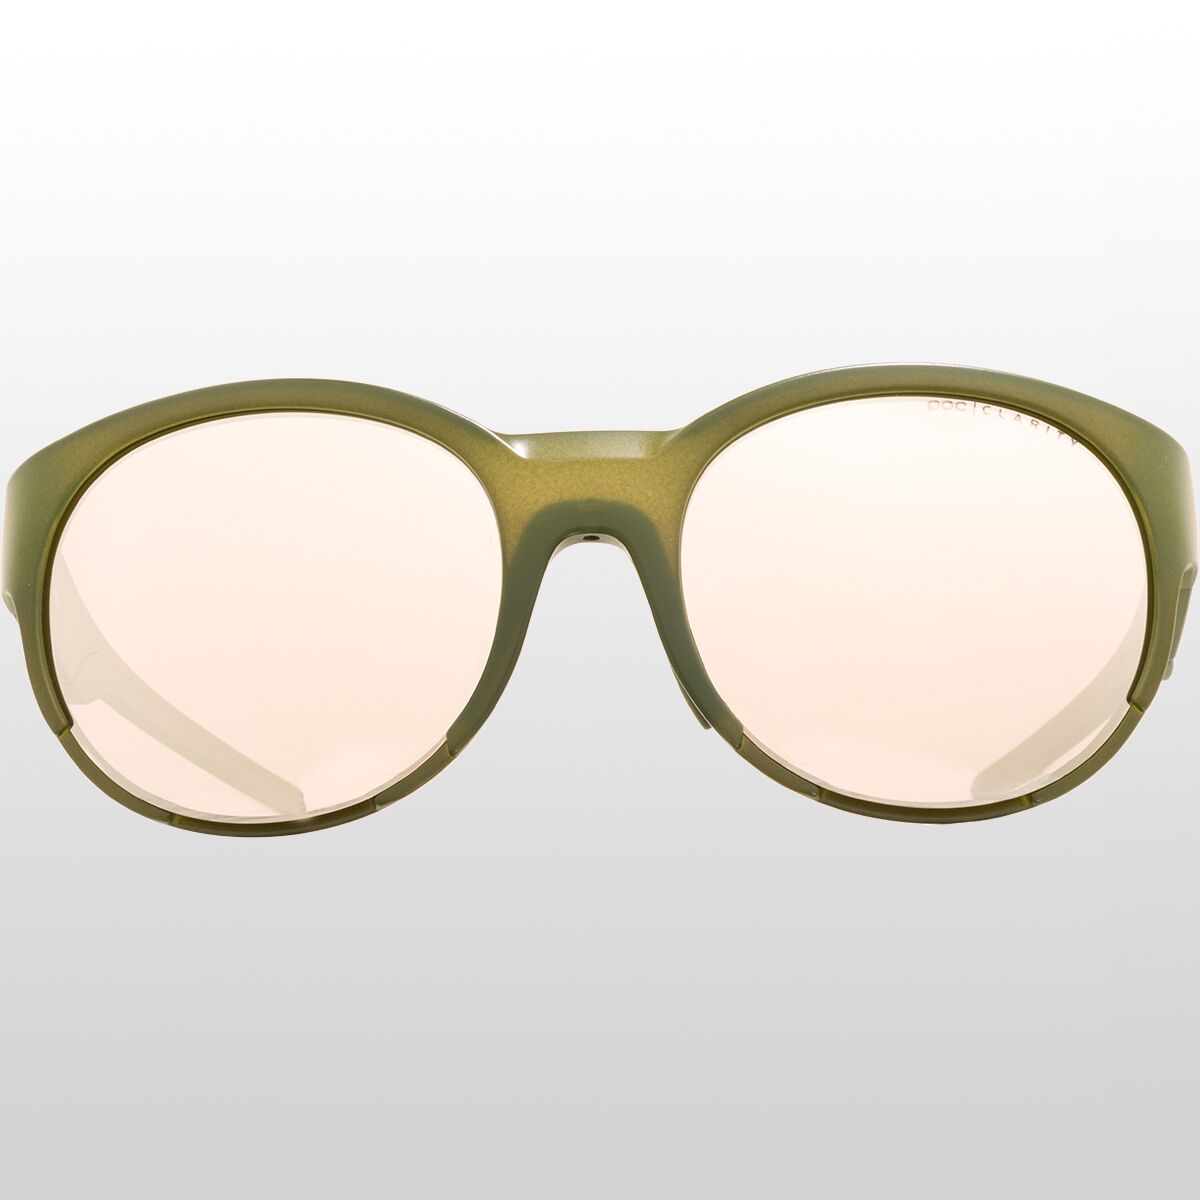  POC Avail Sunglasses - Accessories